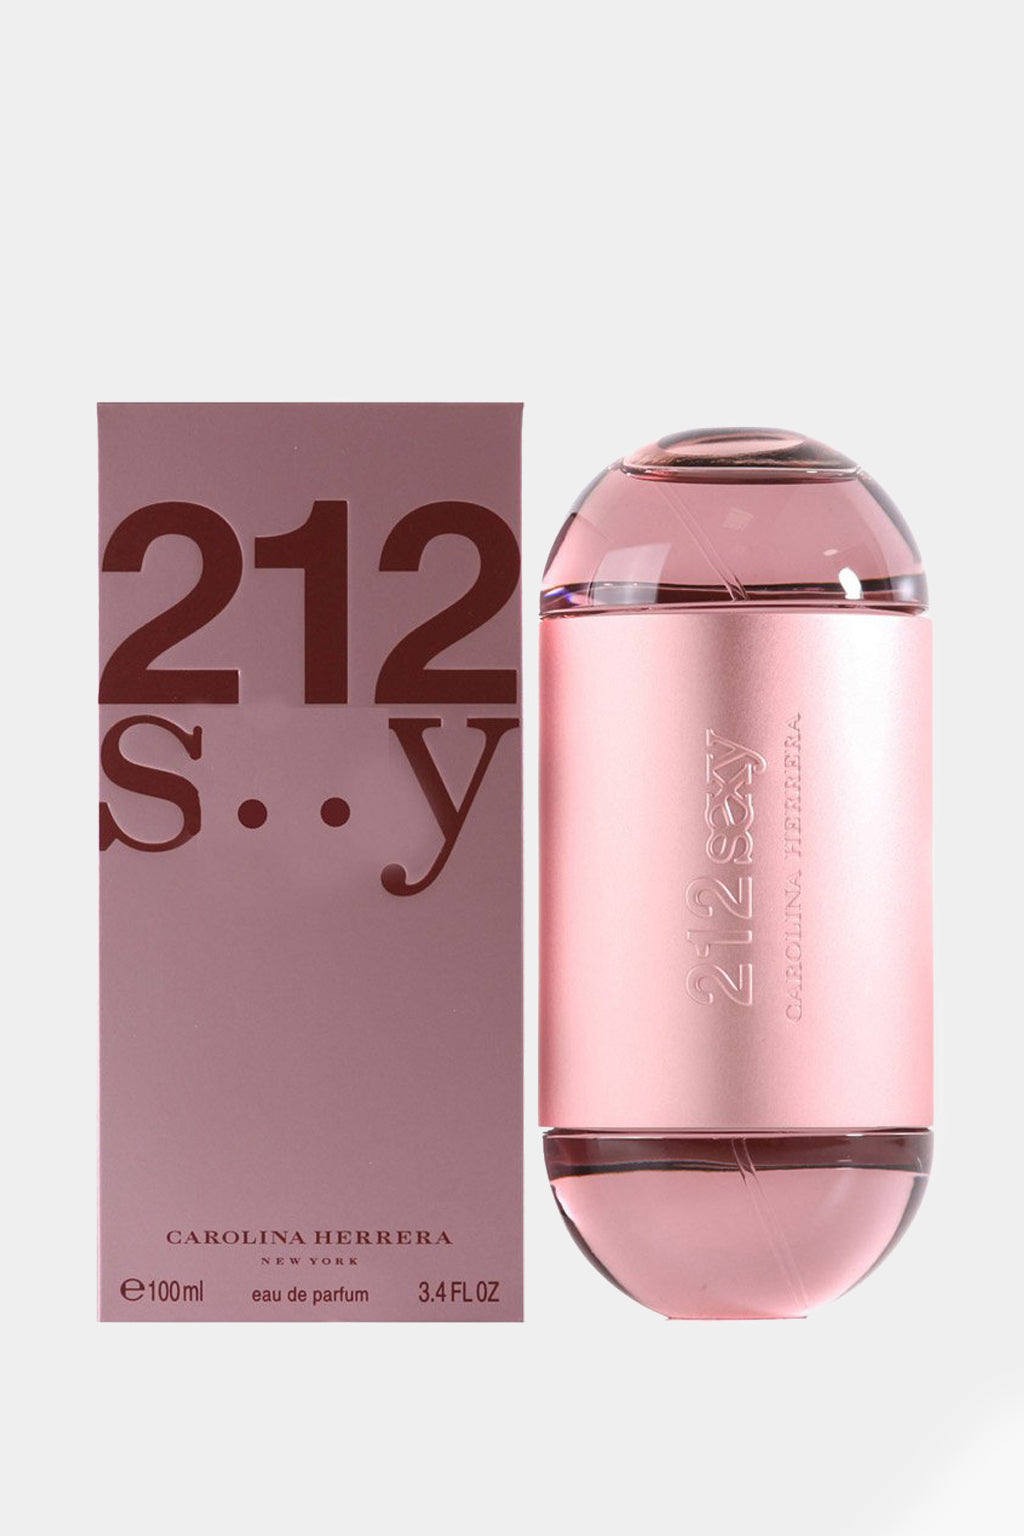 Carolina Herrera - 212 Sexy Eau de Parfum